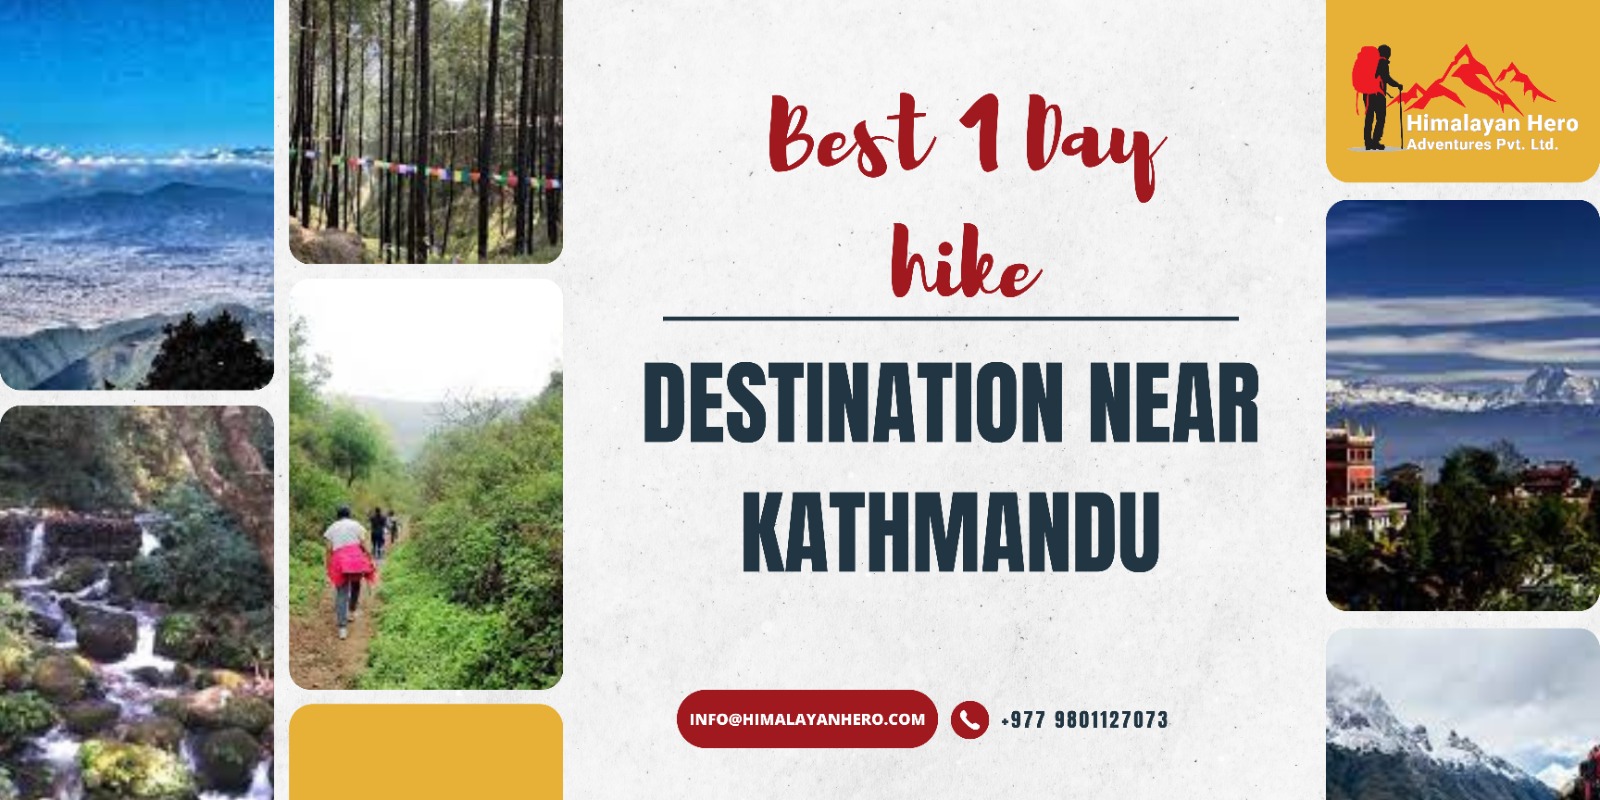 6 Best Day Hike Destinations Near Kathmandu